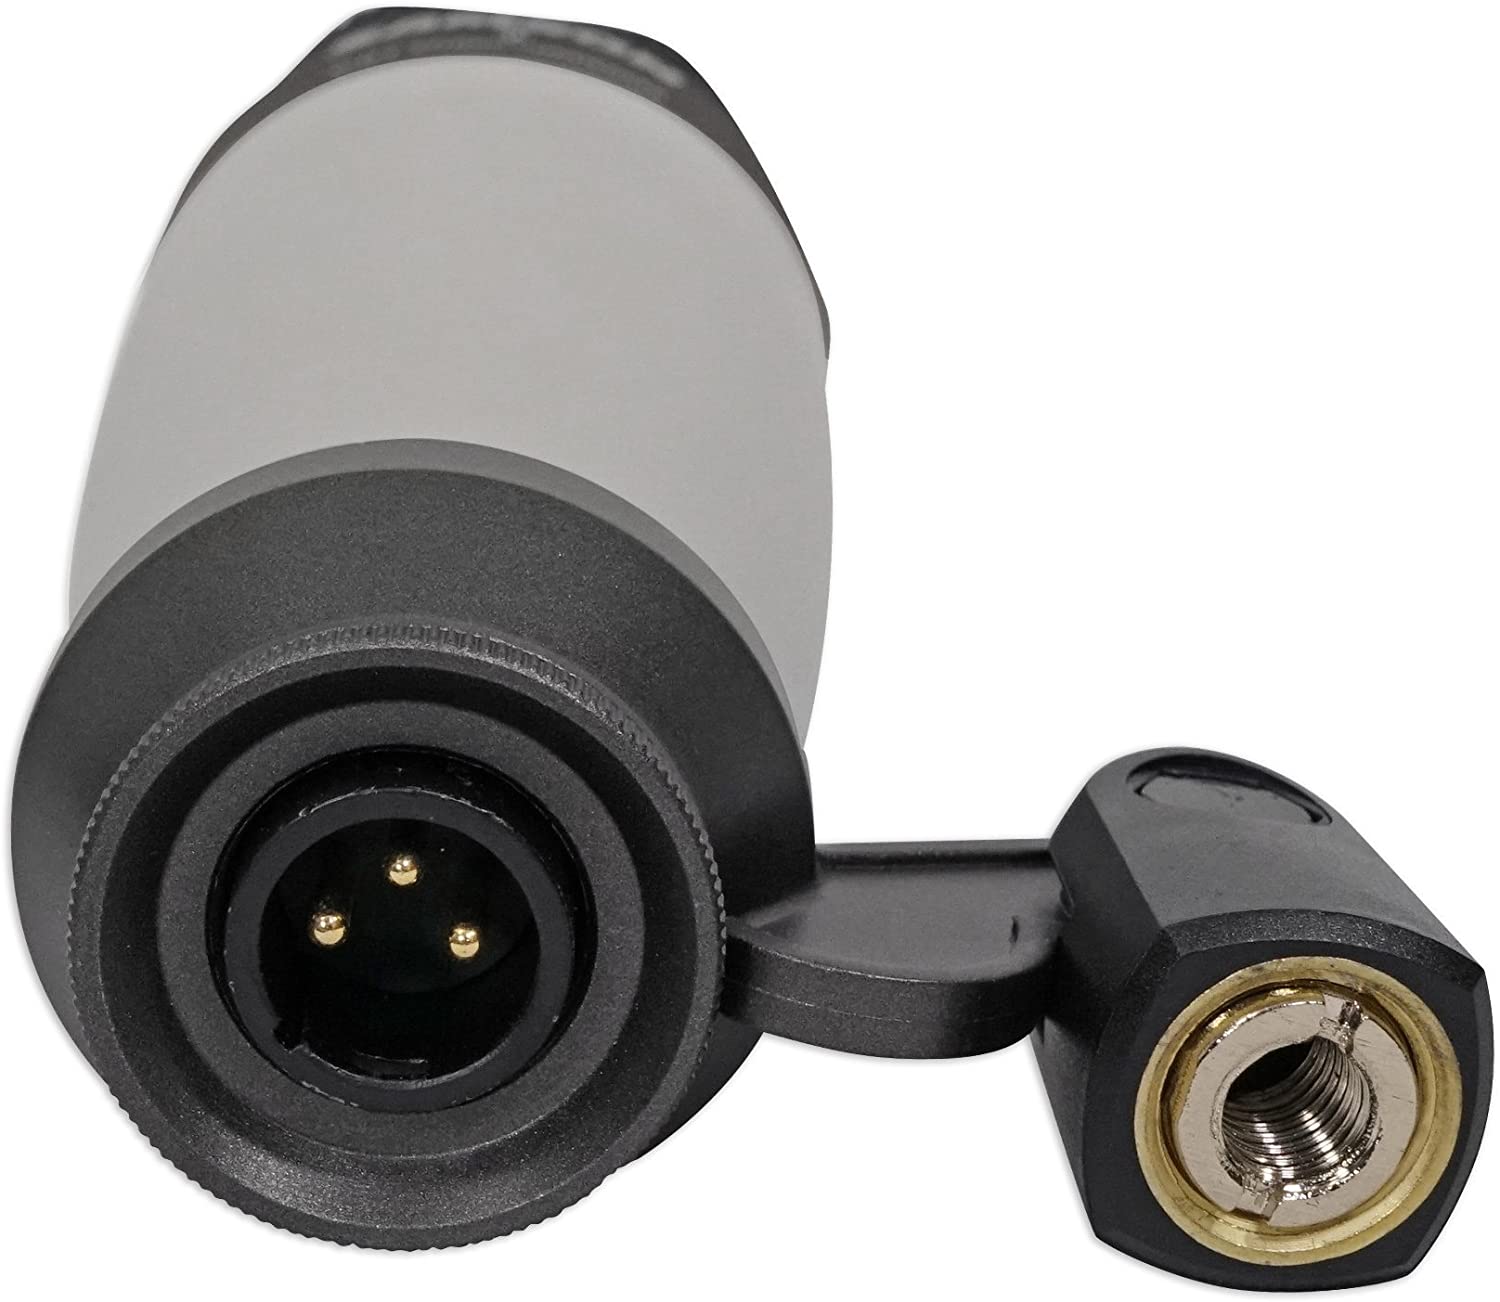 Samson C01 Large-Diaphragm Cardioid Studio Condenser Microphone - Pro-Distributing